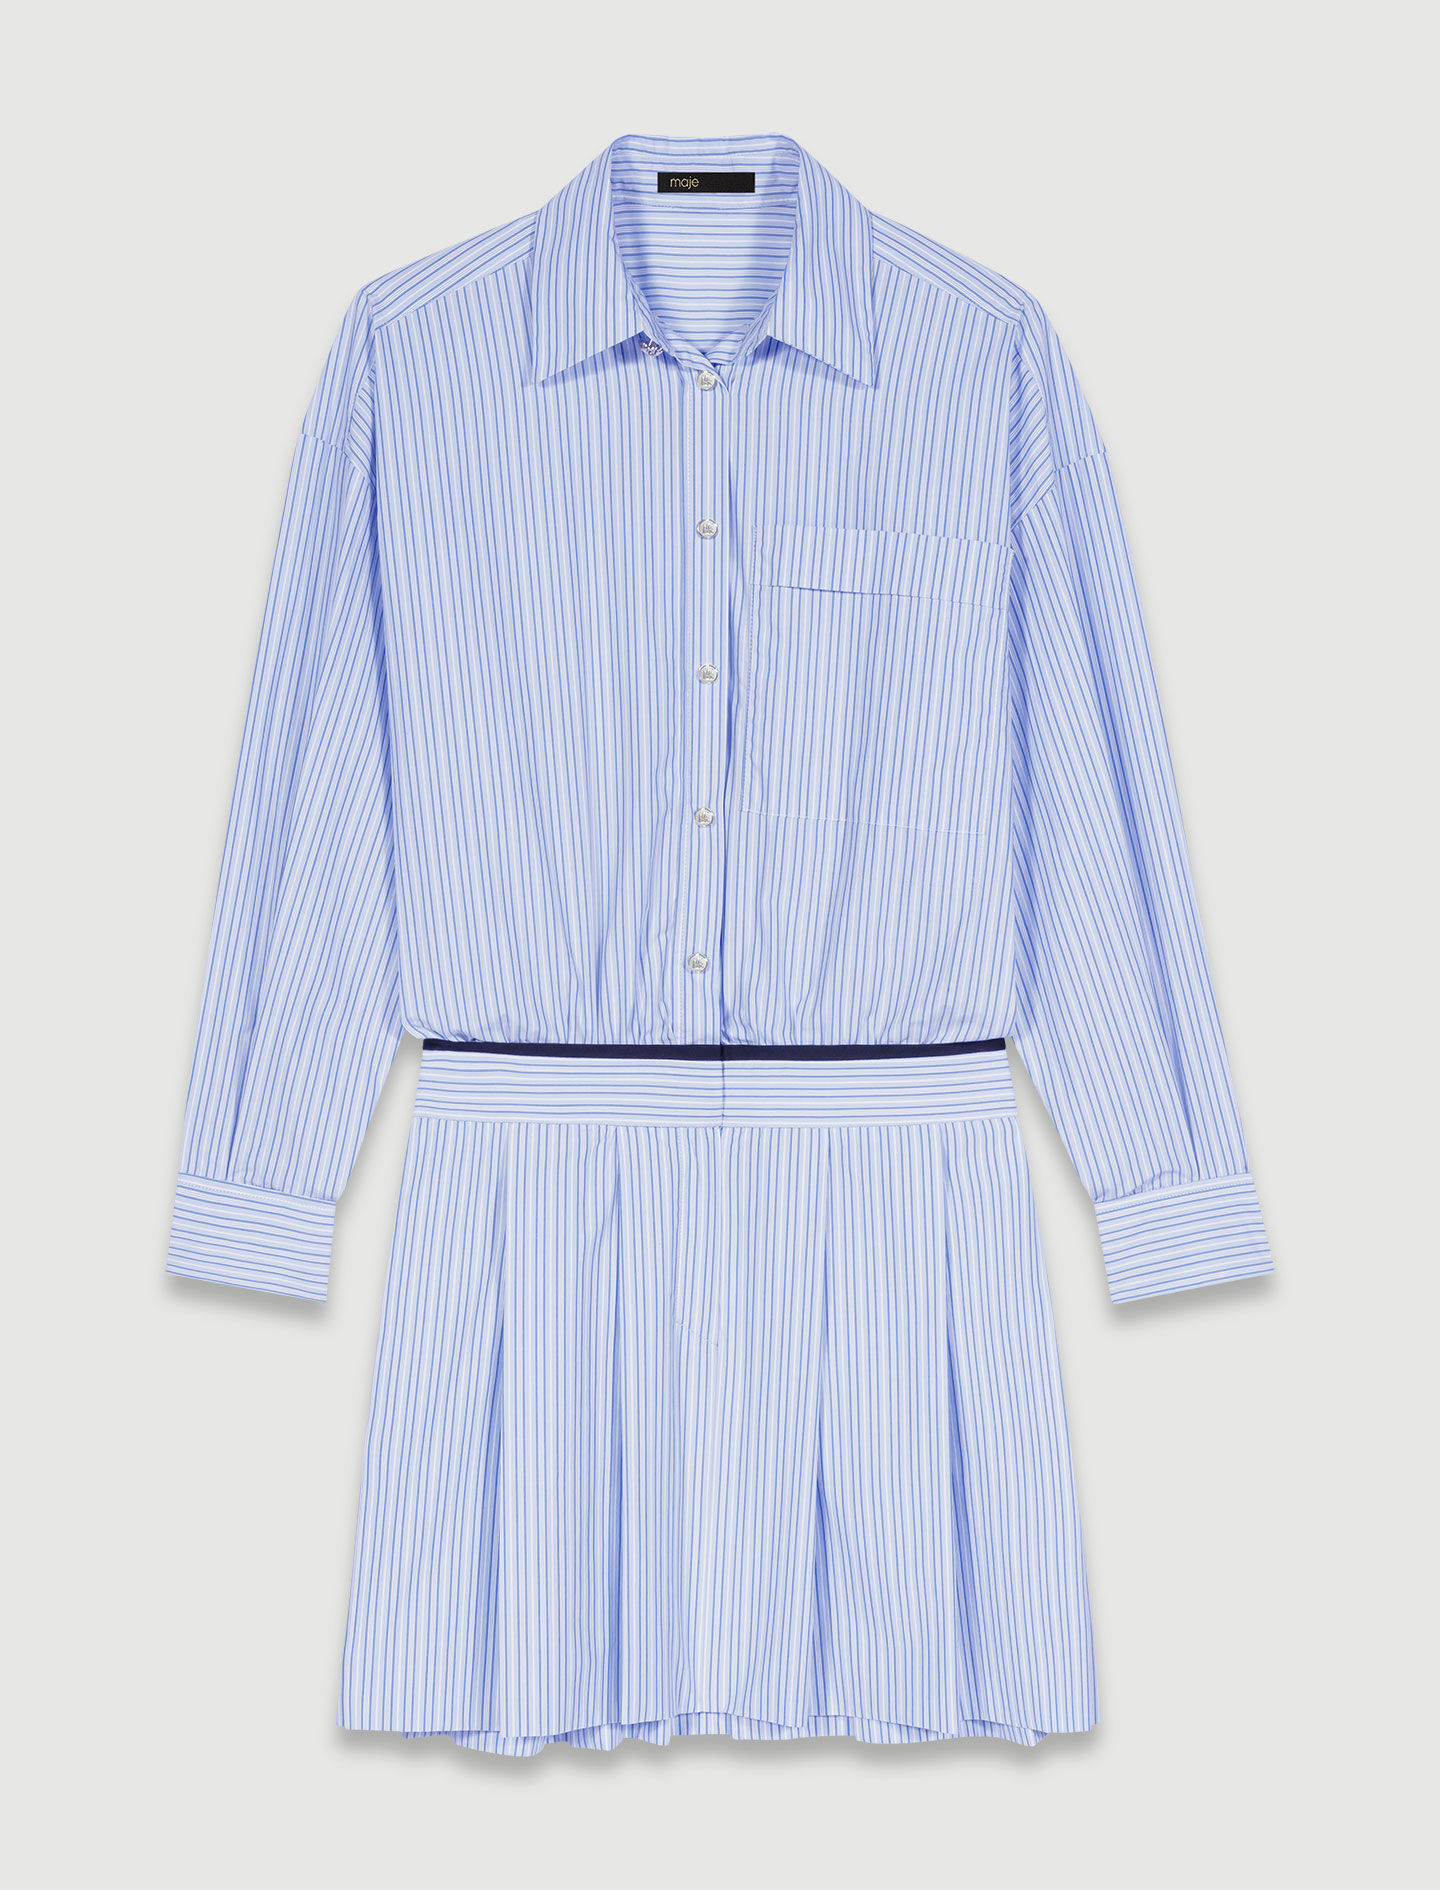 224RAUDRI Short shirt dress - Dresses - Maje.com